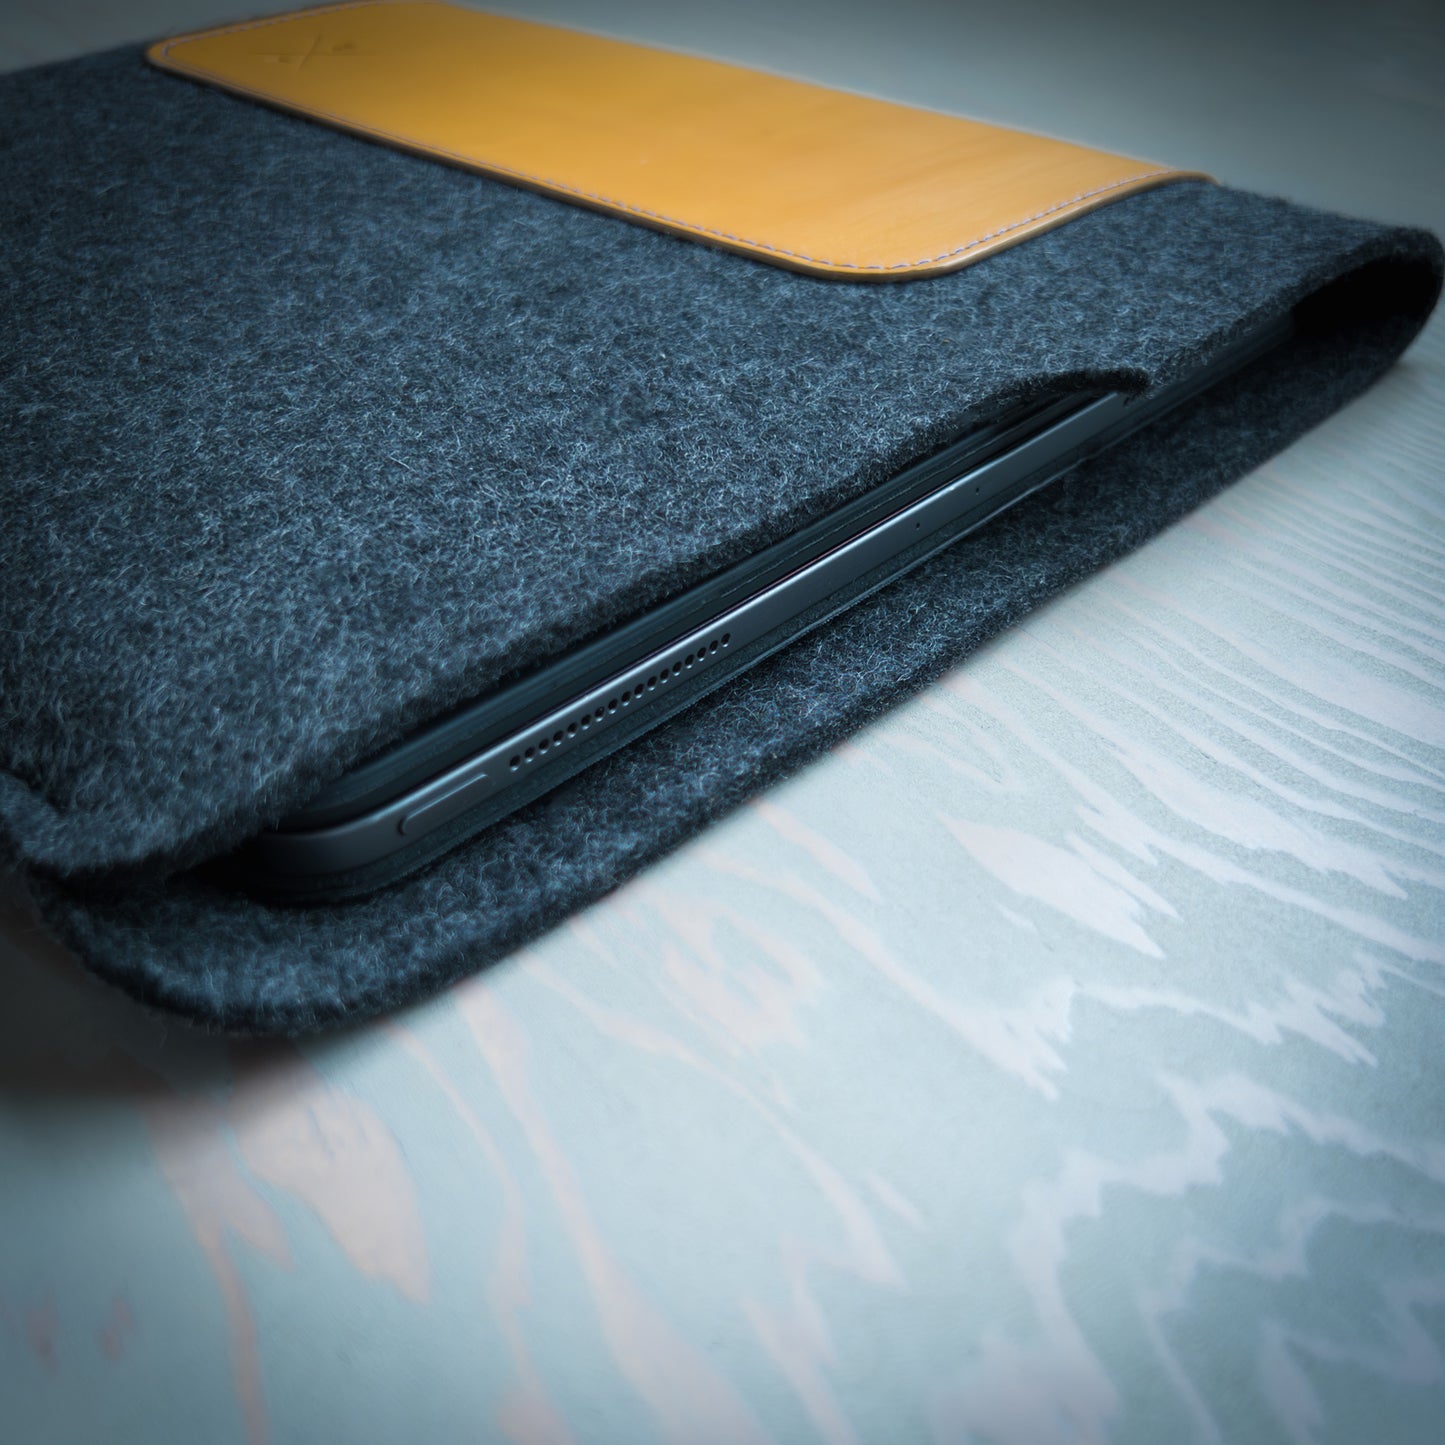 iPad Sleeve in Yellow Leather and Wool Felt Handmade in Canada